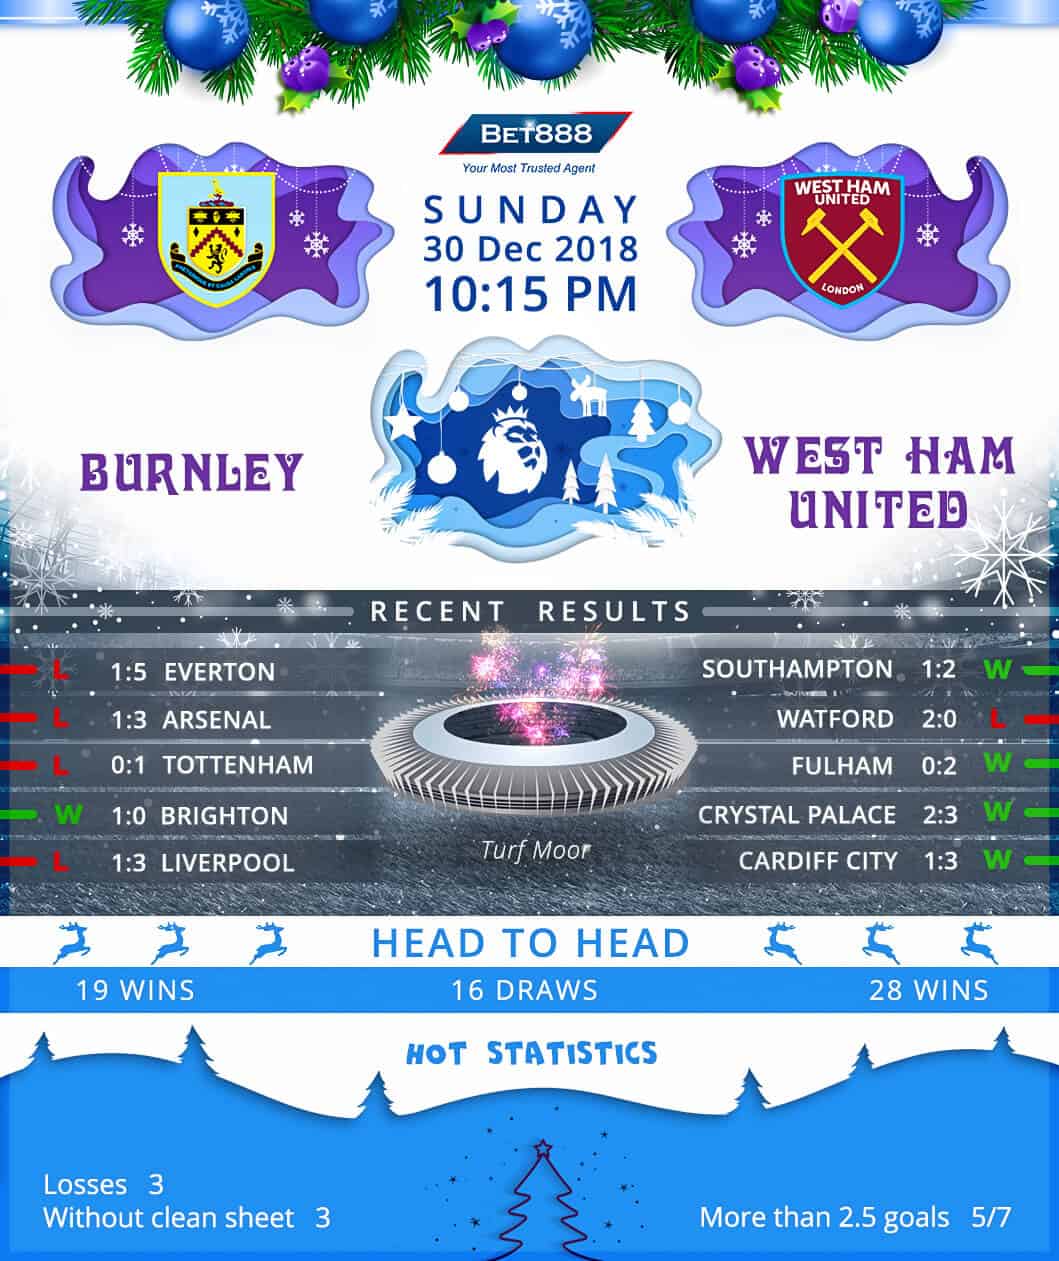 Burnley vs West Ham United 30/12/18